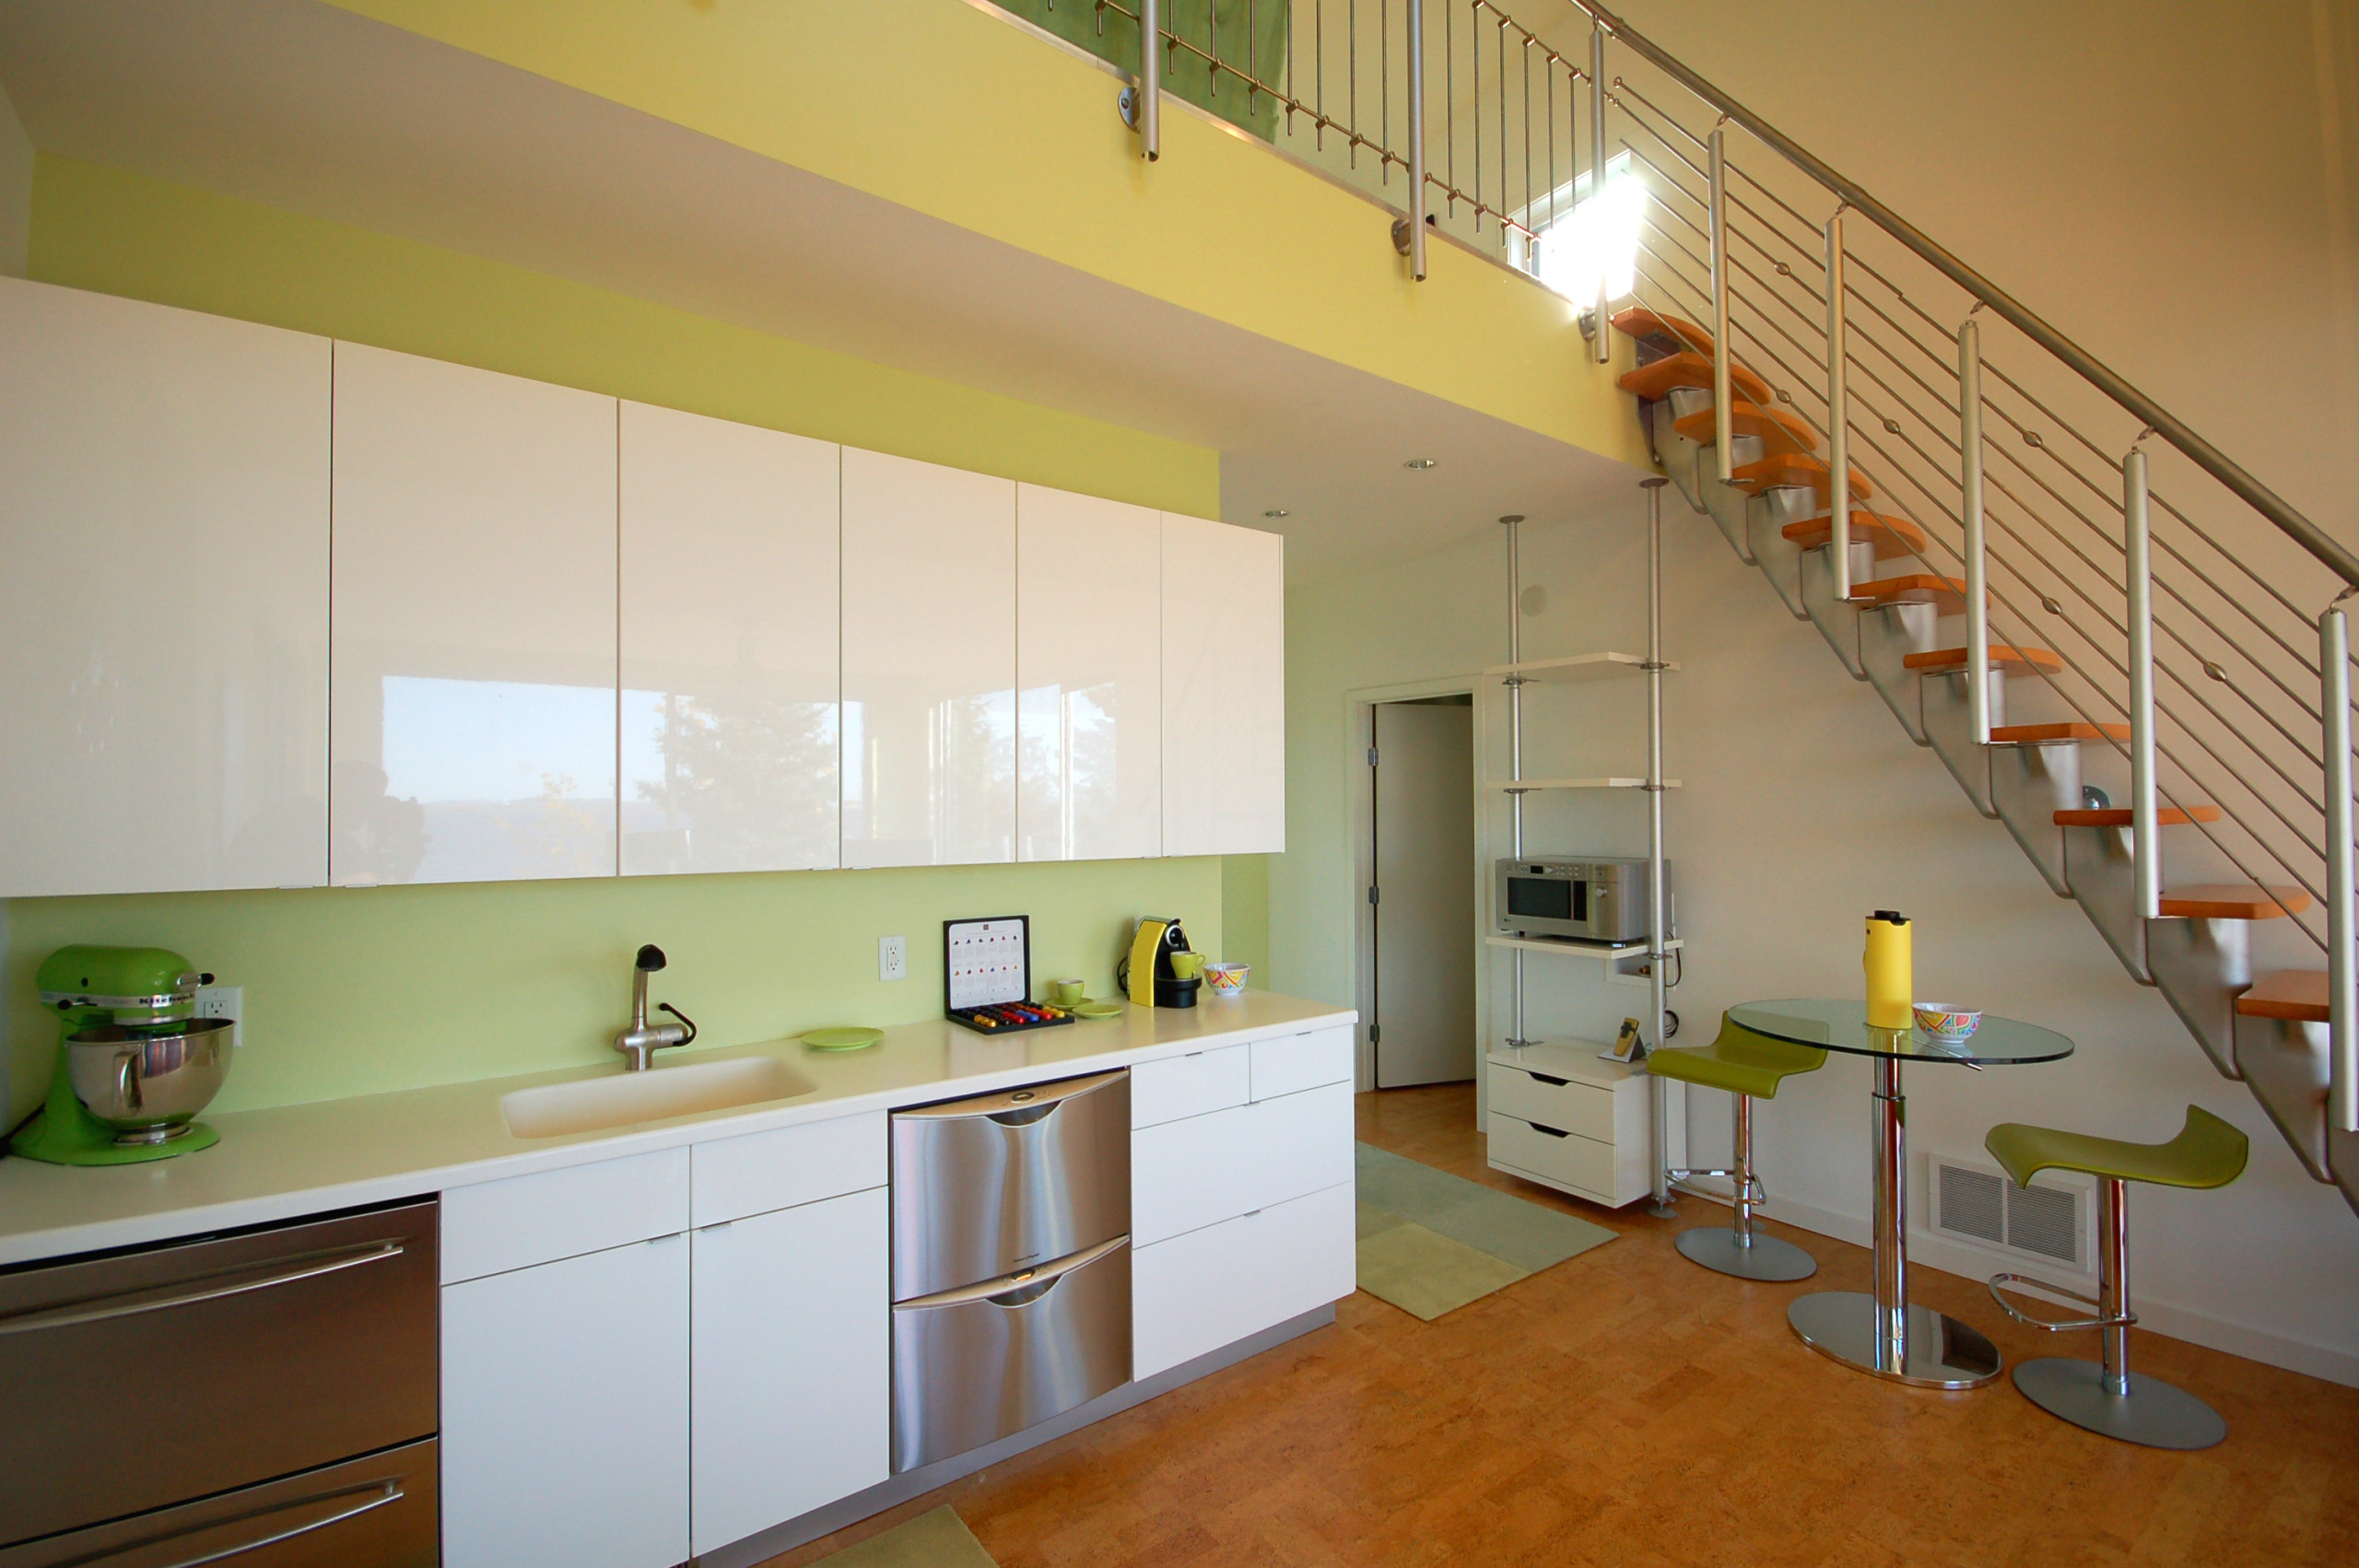 Modular Small House Modern Kitchen Design - pic-county